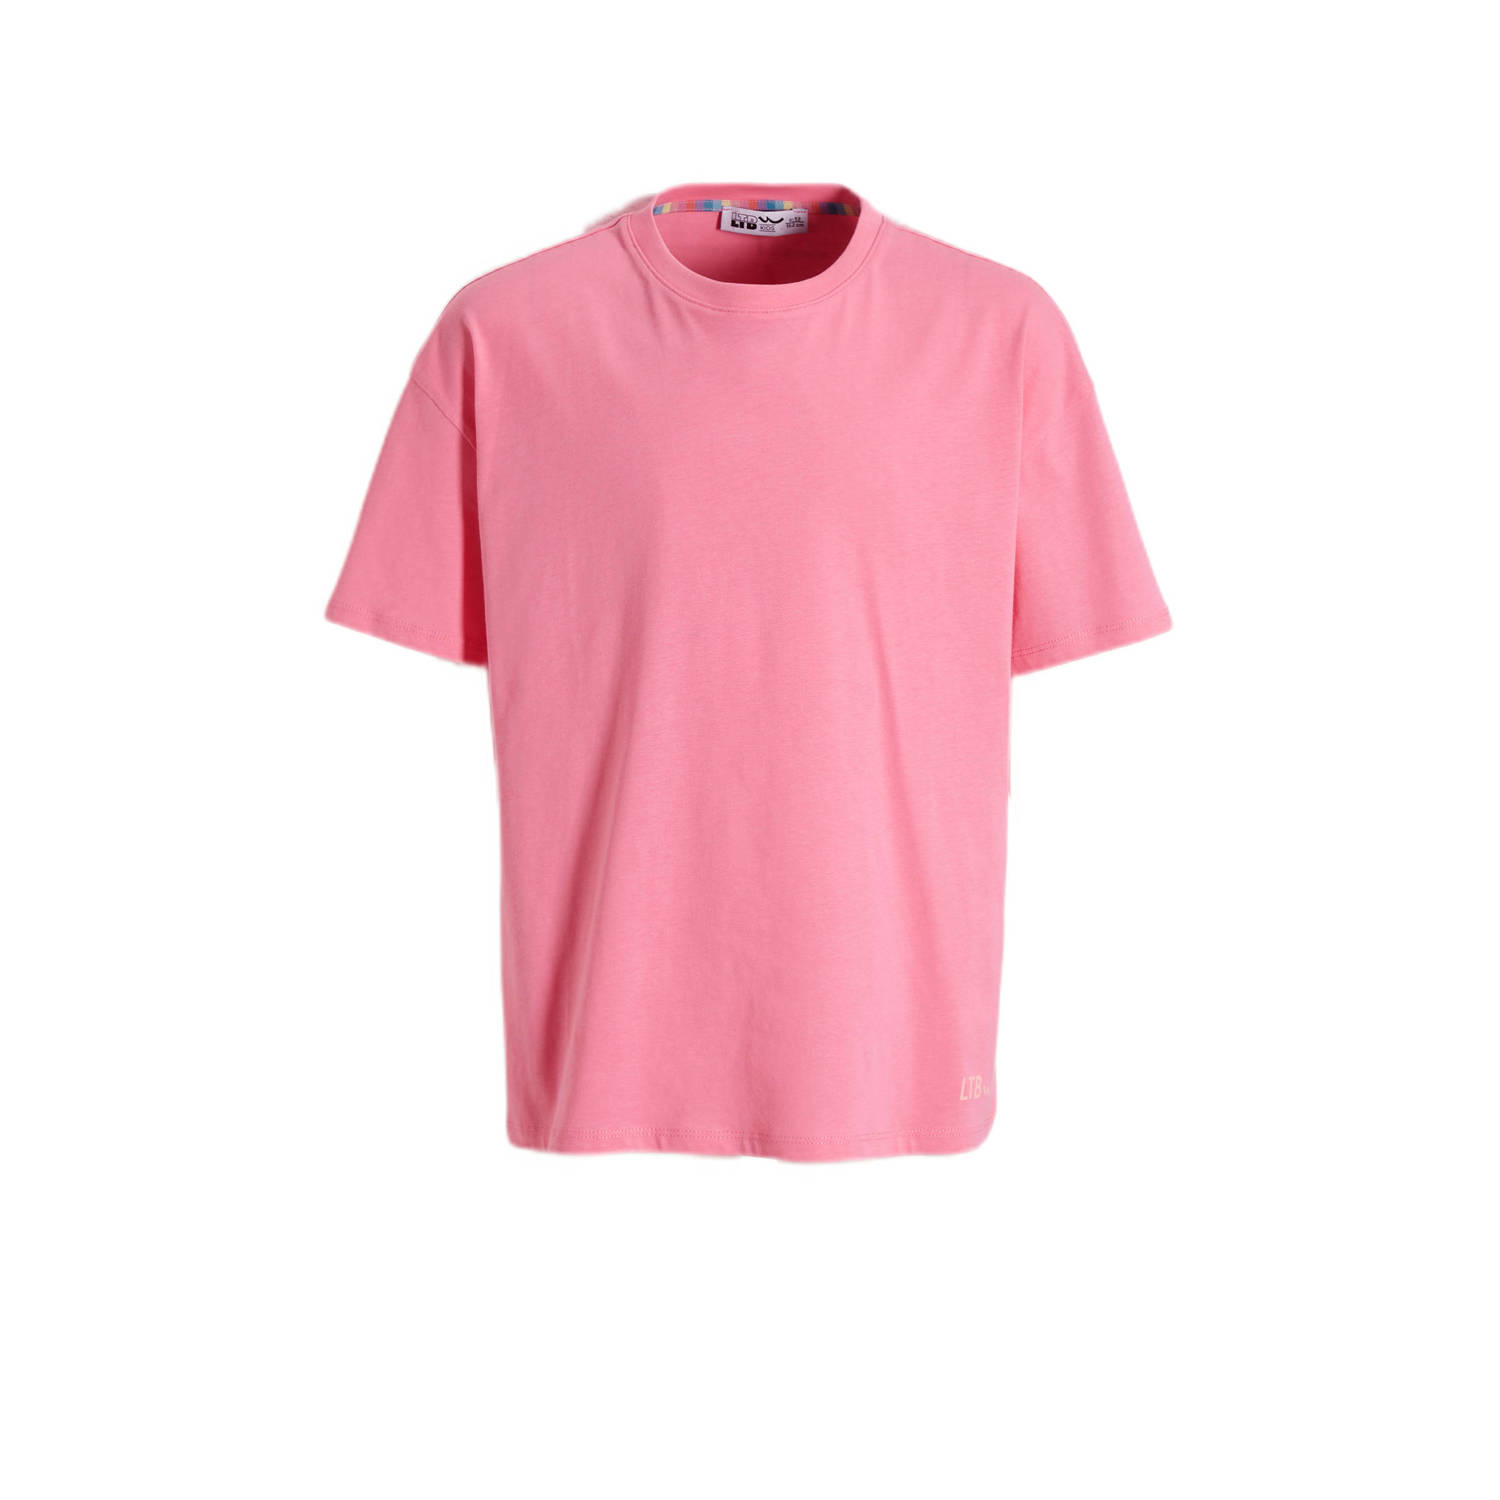 LTB T-shirt KOKAHA met backprint roze